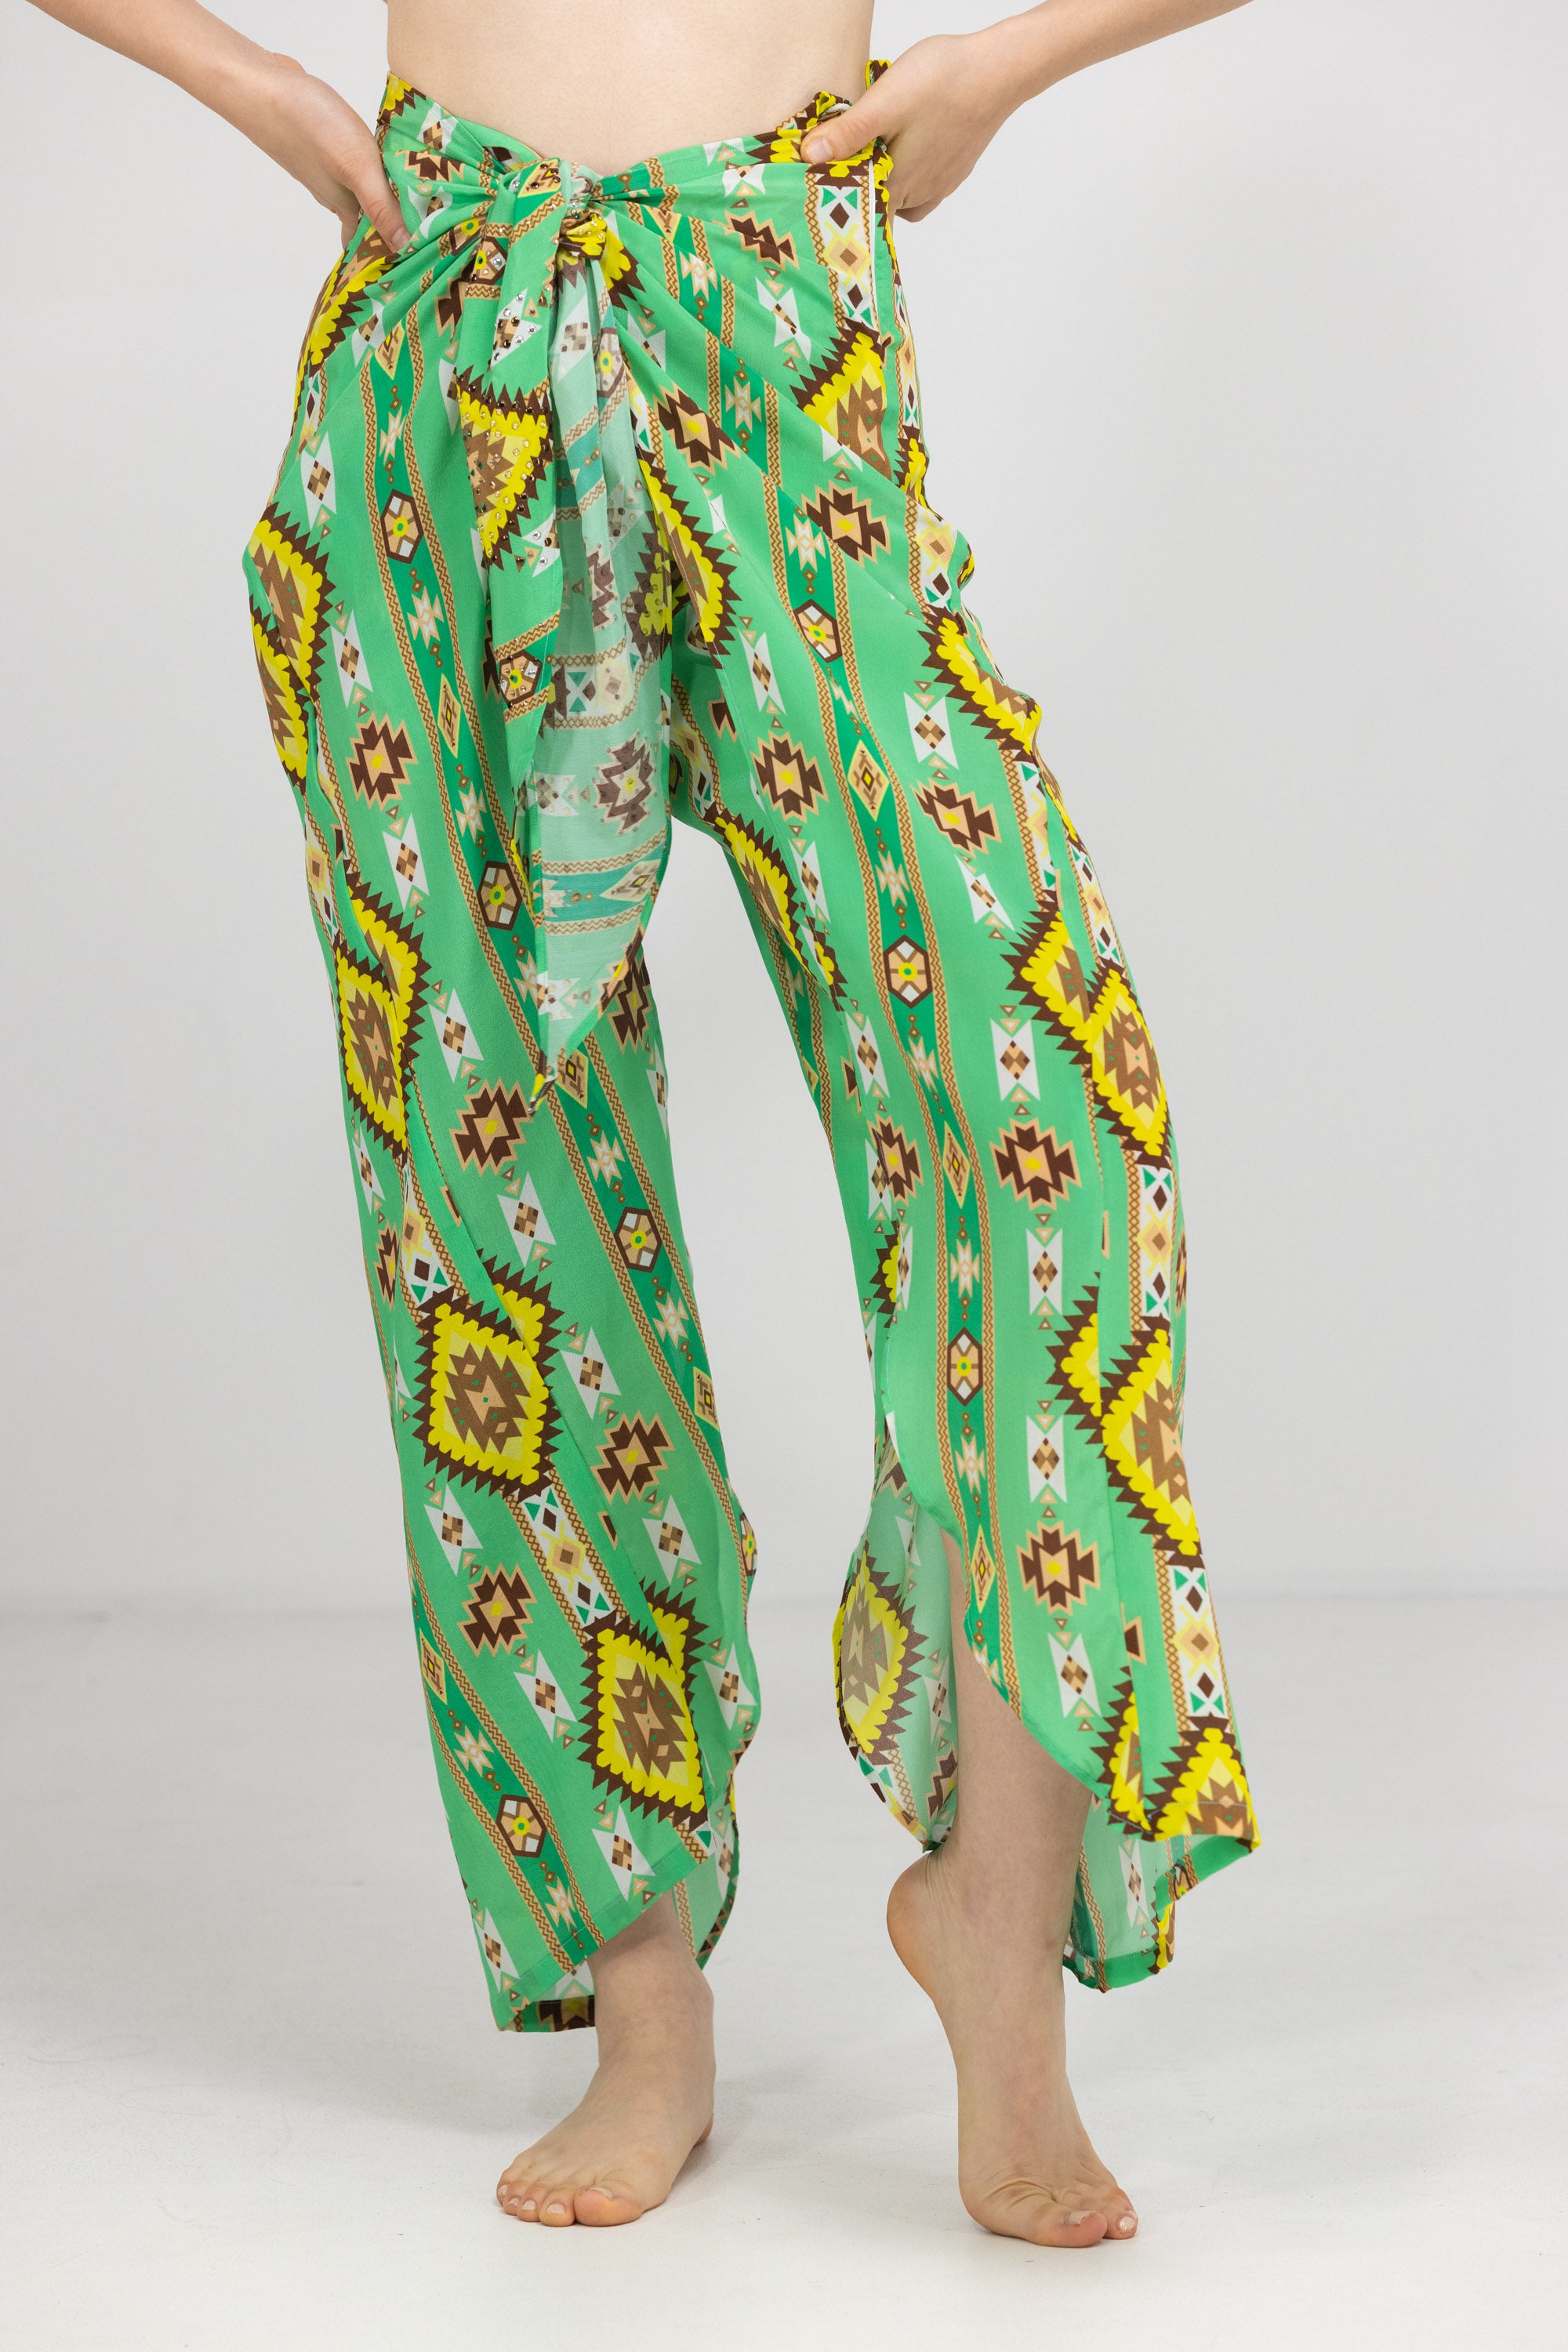 INOA Fashion Silk FISHERMAN PANTS Melbourne Print Green & Yellow